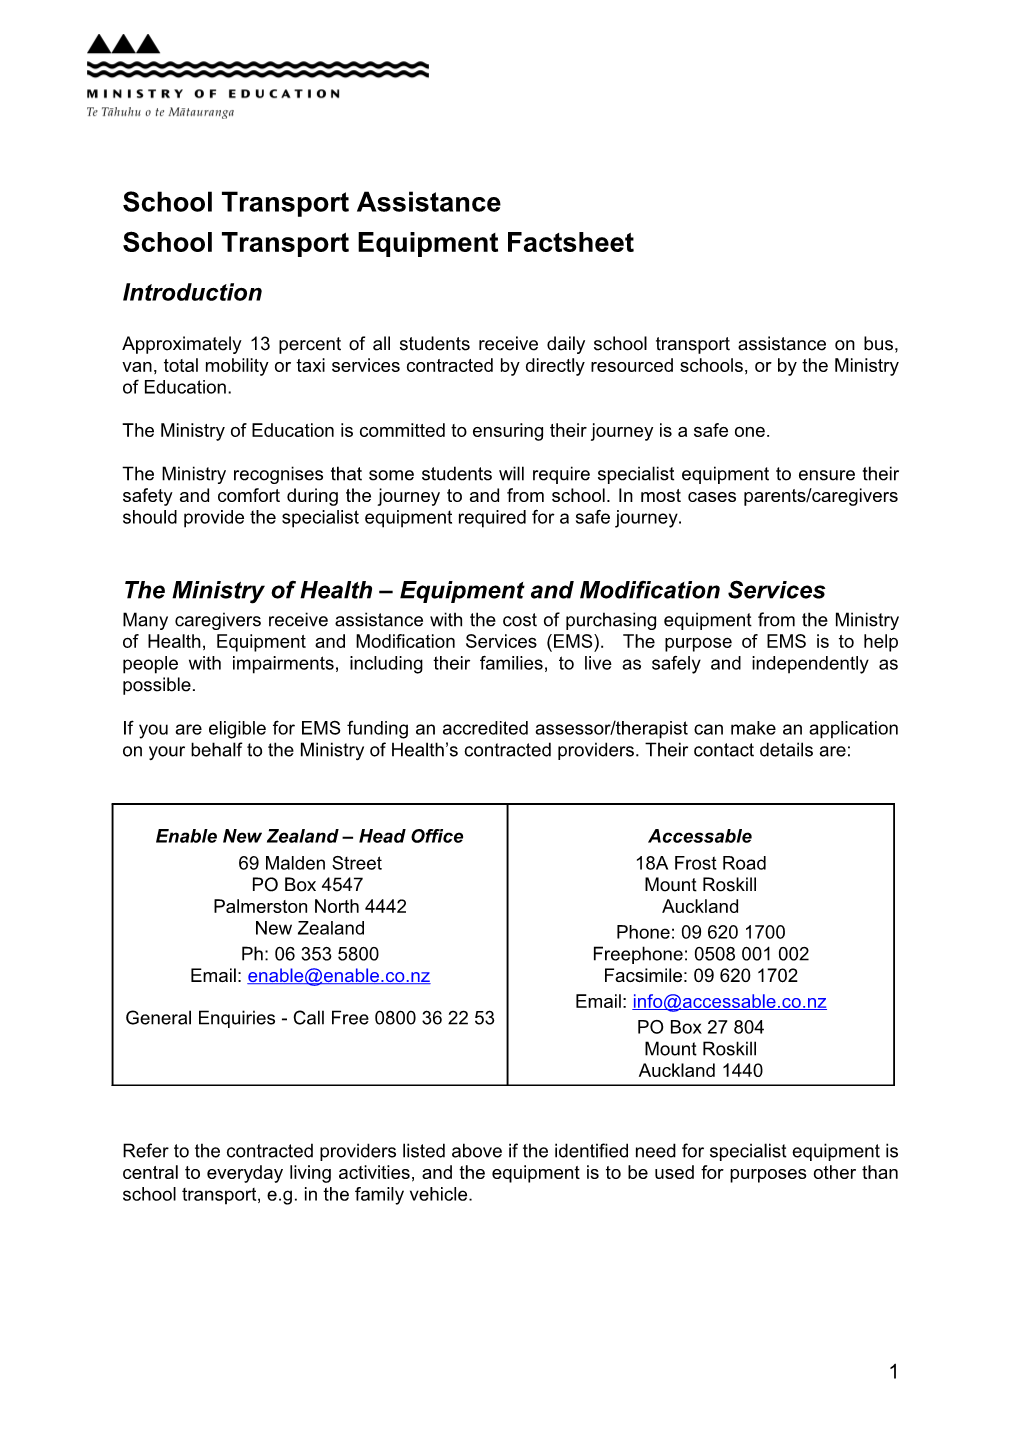 School Transport Equipment Application Form